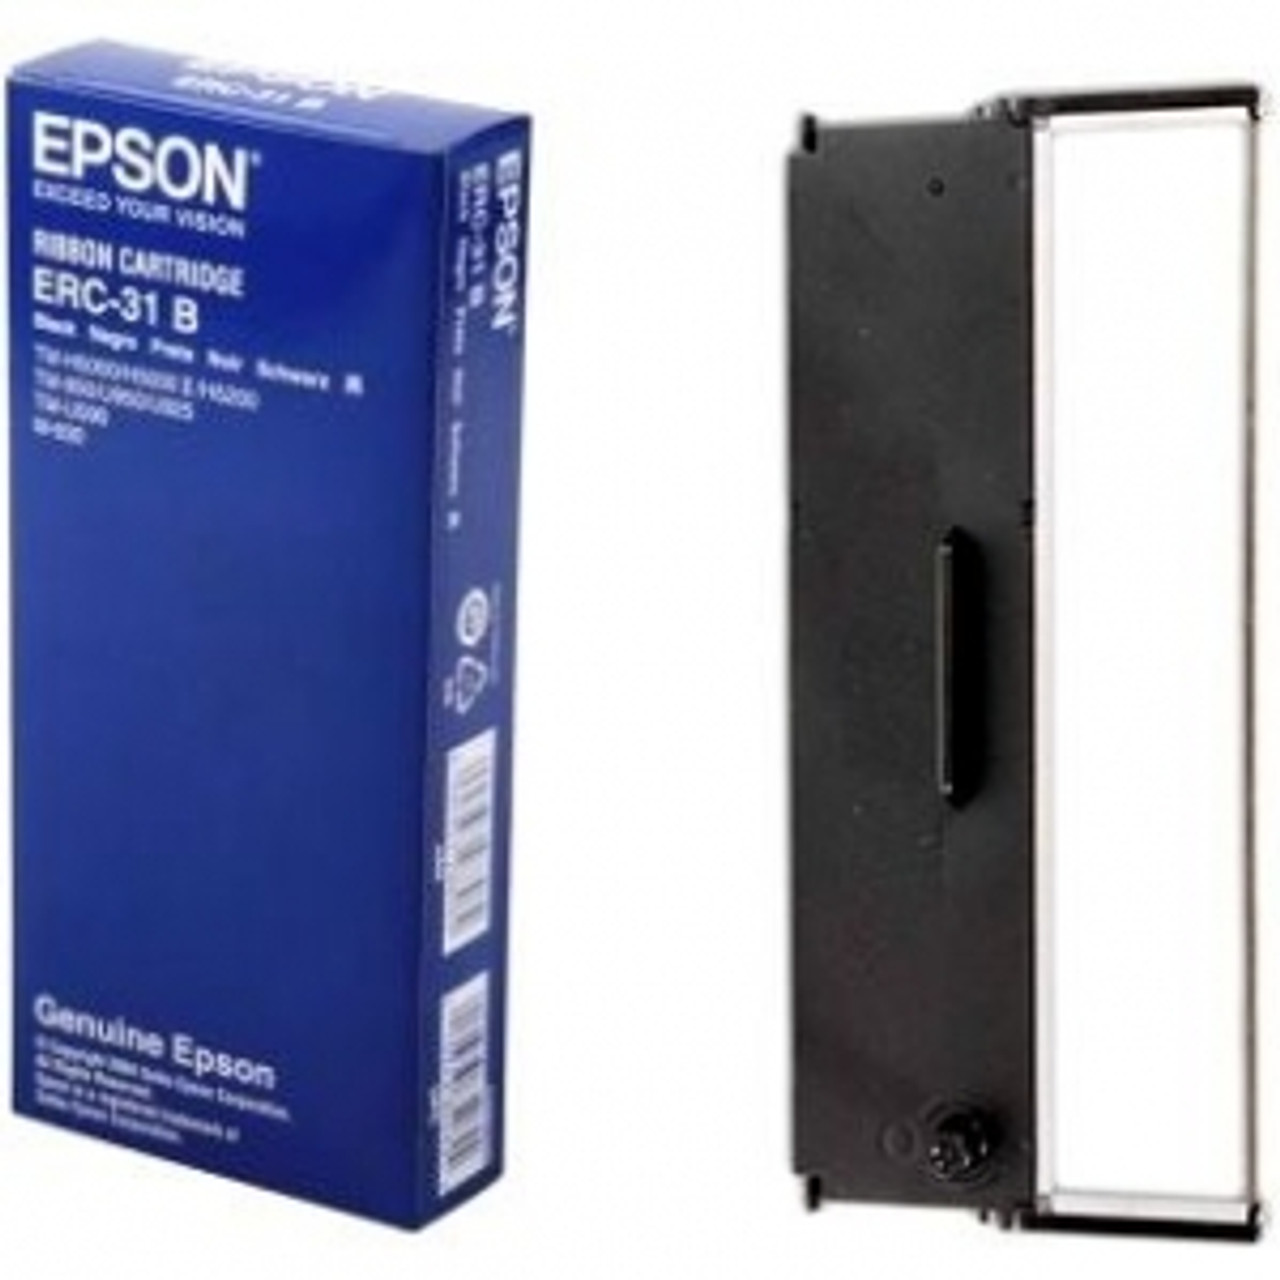 Epson Receipt Printer Ribbon ERC-31B Black Ink Robbon